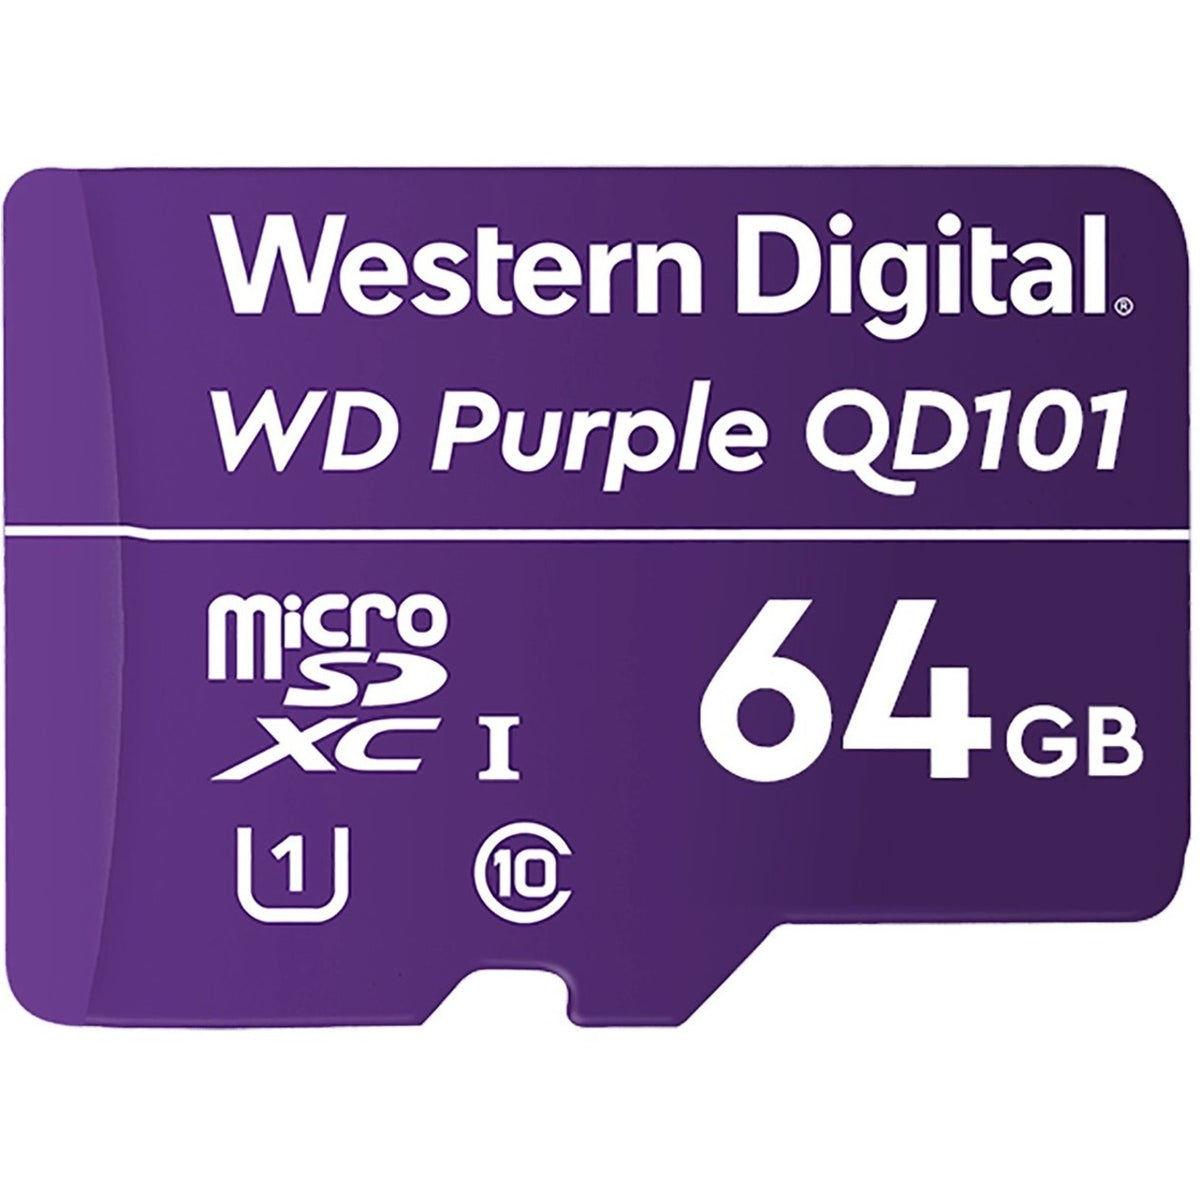 Western Digital Purple 64 GB microSDXC - WDD064G1P0C